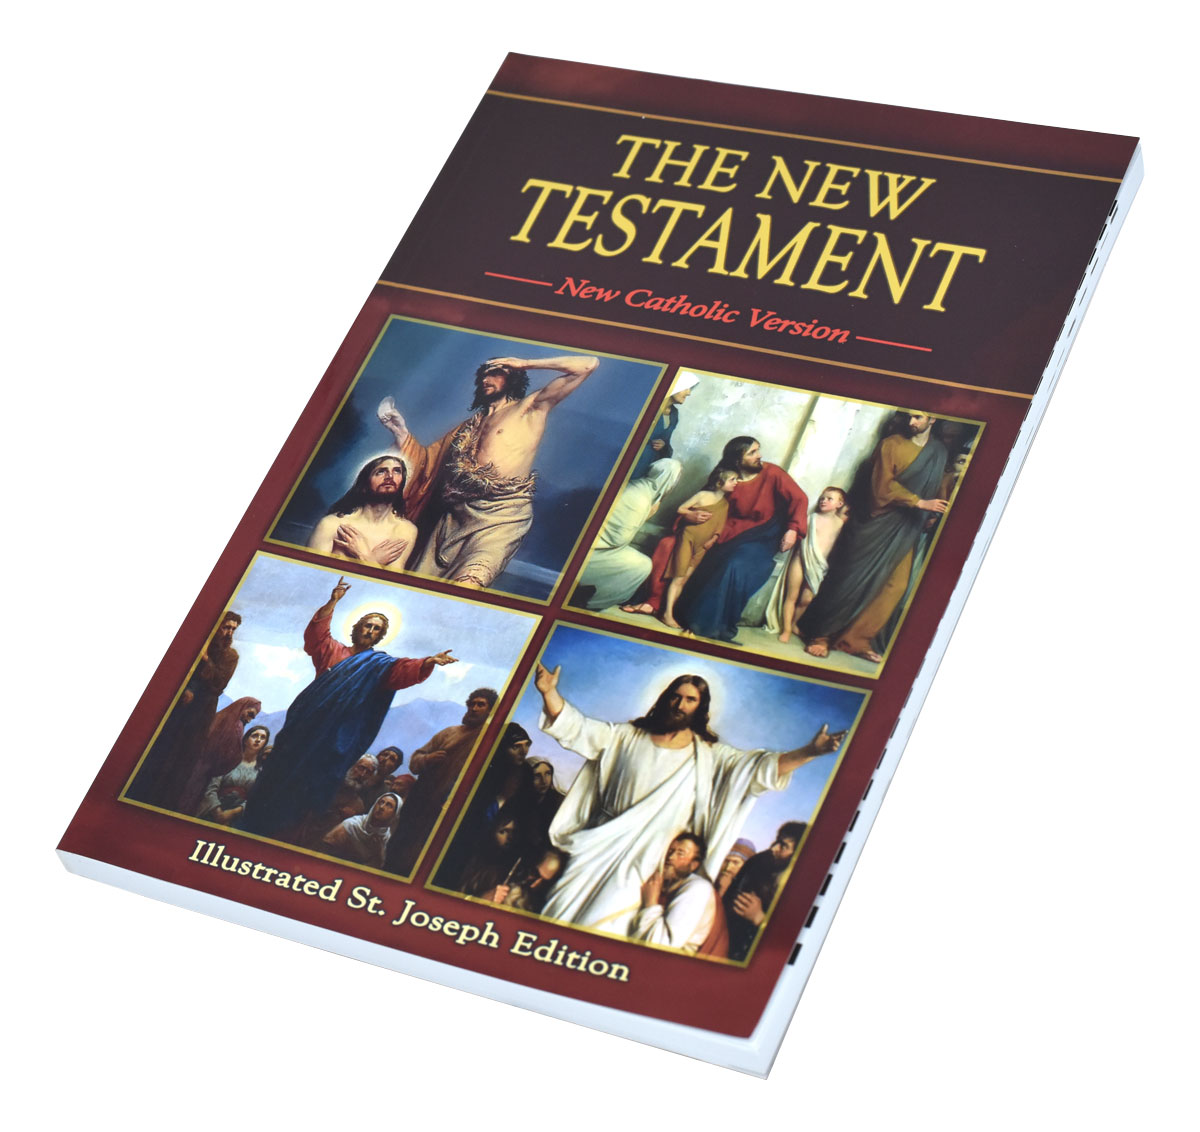 St. Joseph New Catholic Version New Testament Study Edition Paperback 311/04